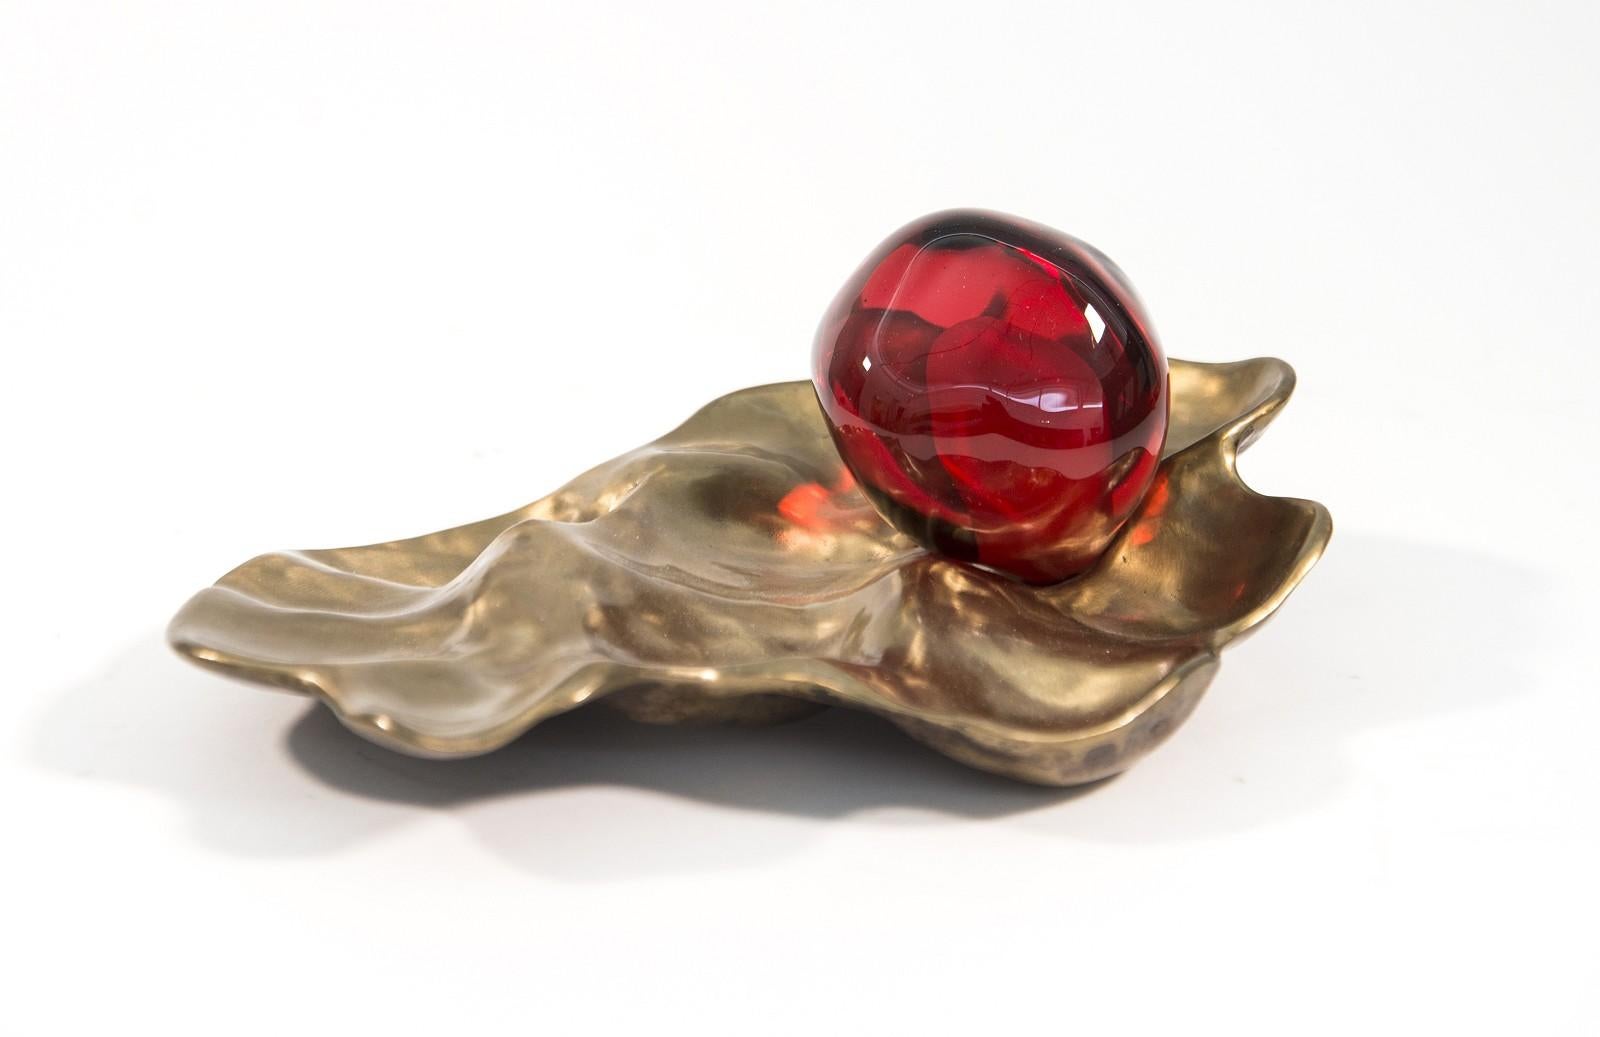 Grenade avec enveloppe - petite sculpture en verre, bronze, nature morte, rouge vif - Sculpture de Catherine Vamvakas Lay